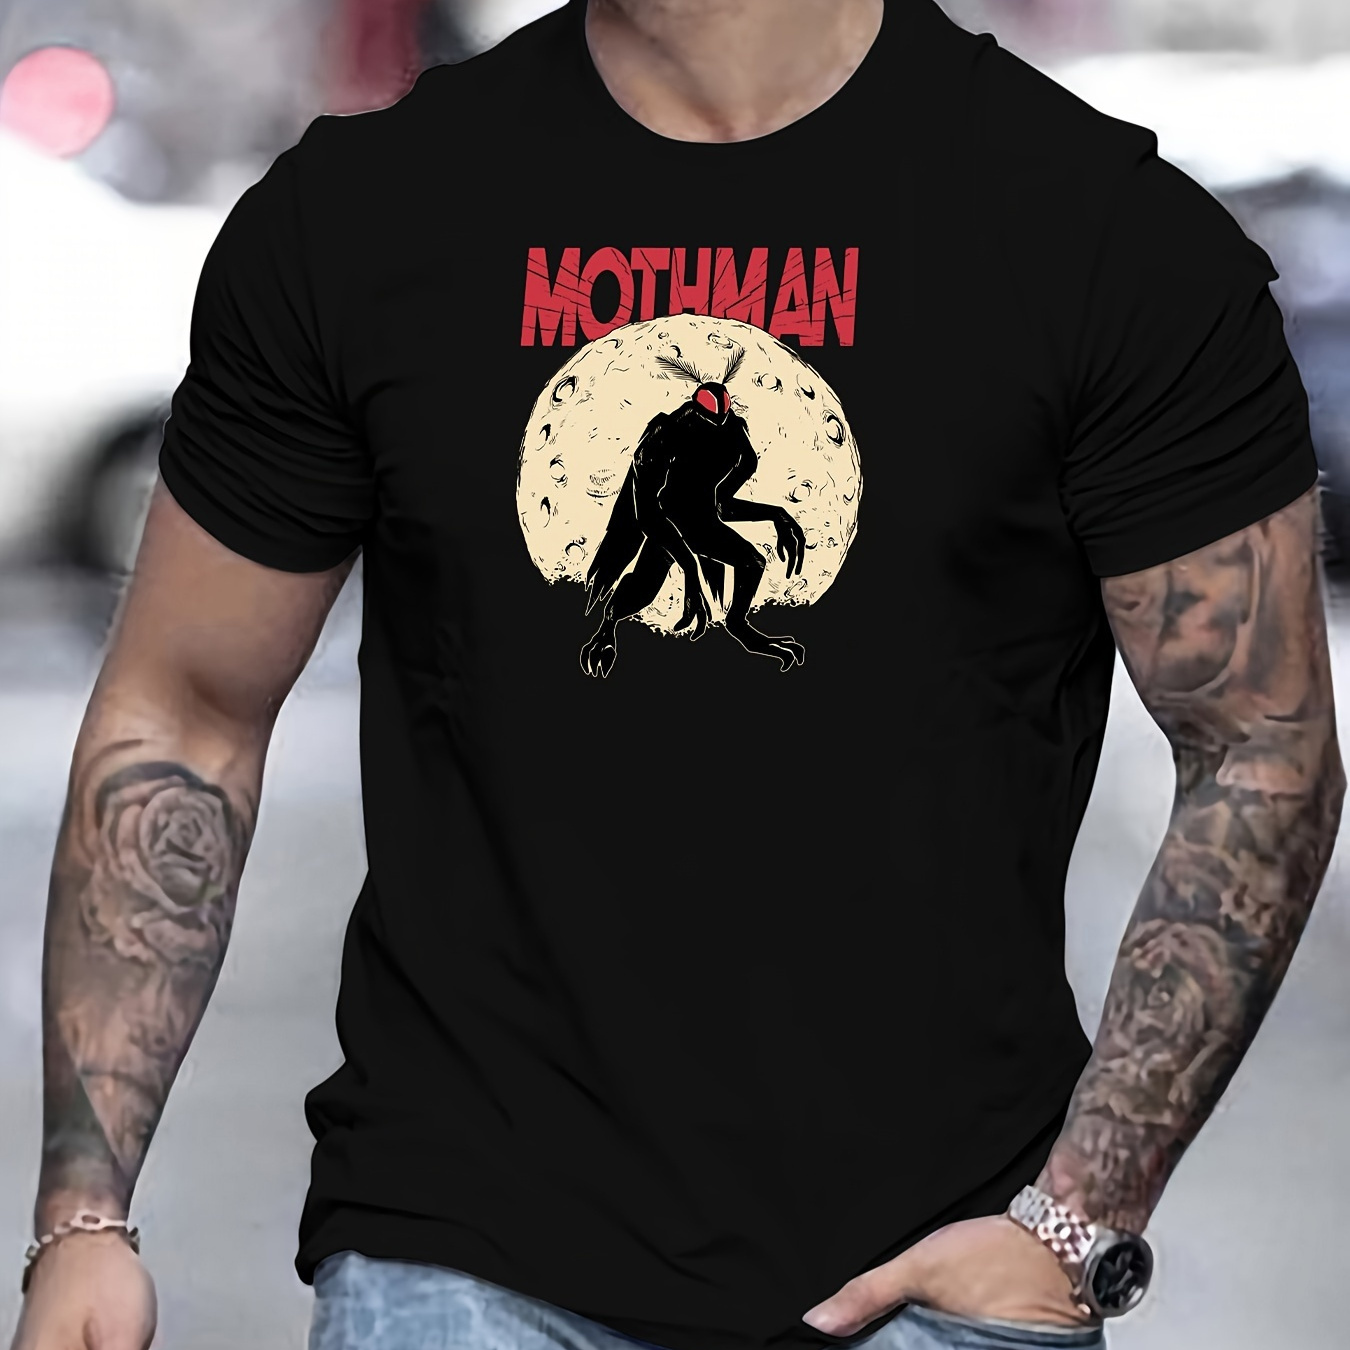 

Mothman Print T Shirt, Tees For Men, Casual Short Sleeve T-shirt For Summer